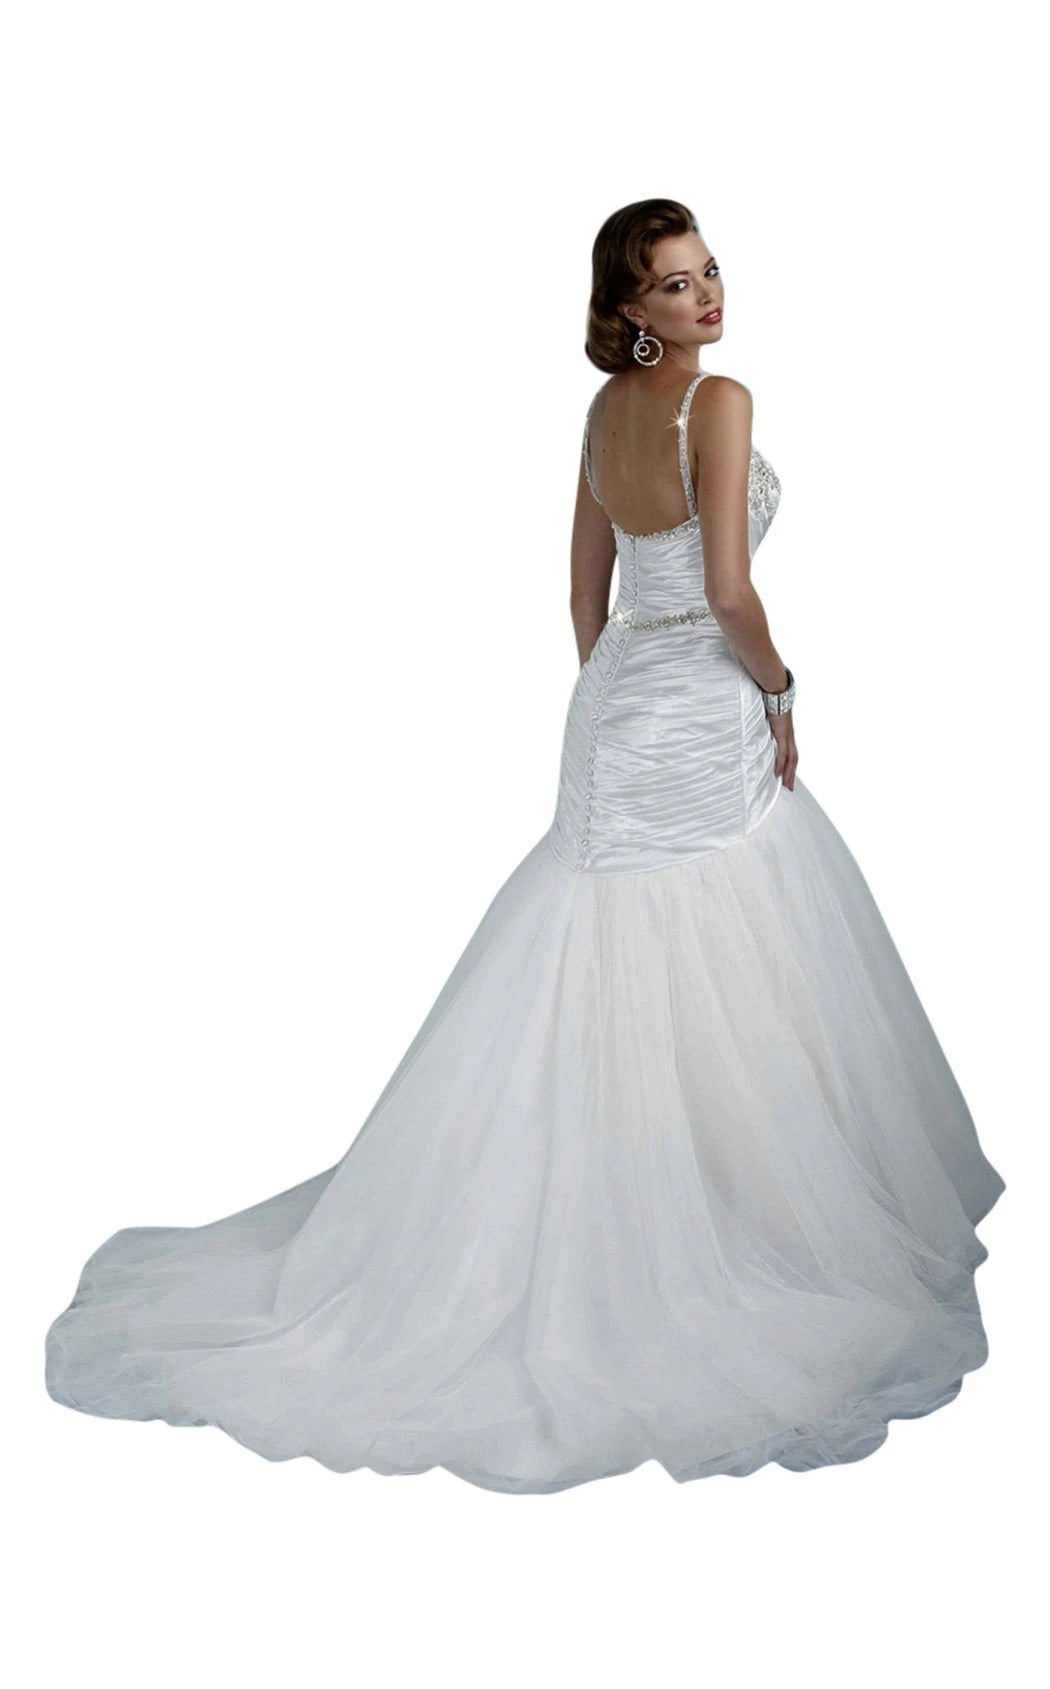 Impression Bridal 10004 Size 10 wedding dress Bridal Gown Mermaid Fit & Flare